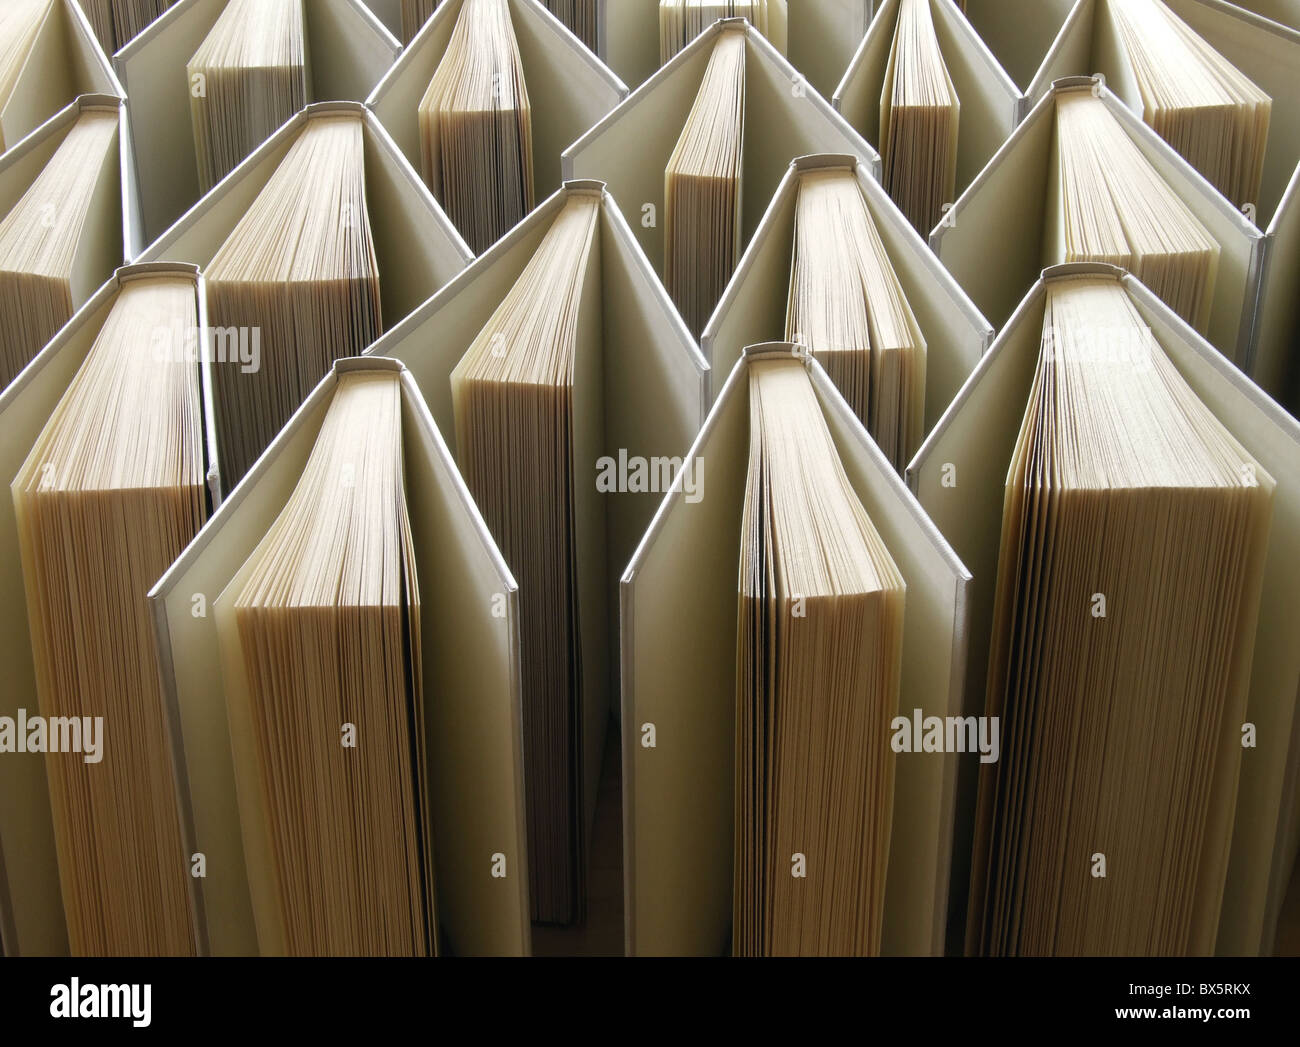 Bücher / books Stock Photo